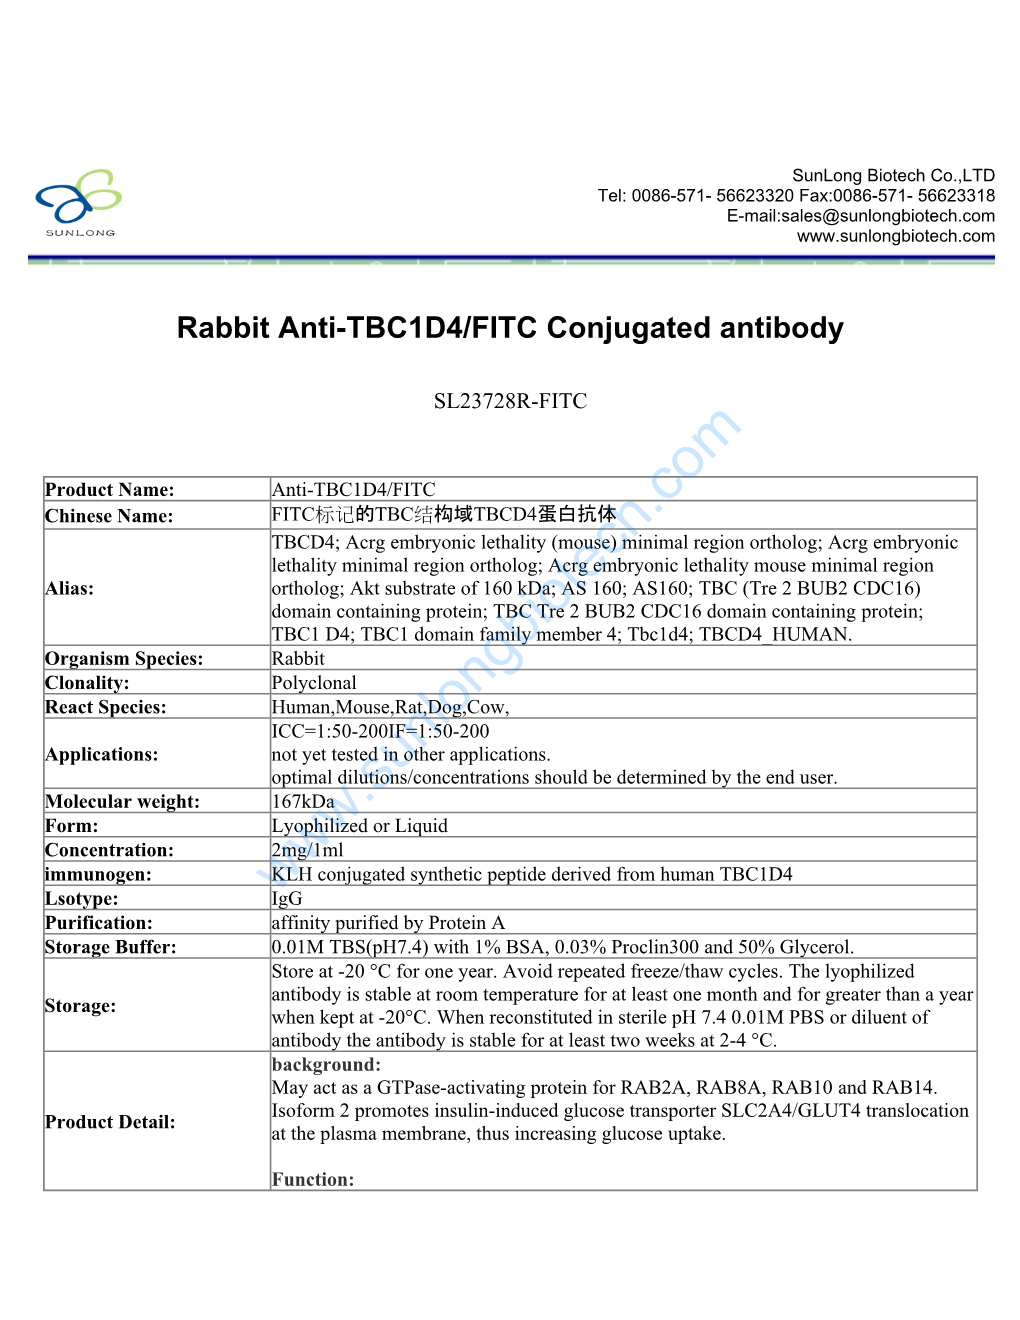 Rabbit Anti-TBC1D4/FITC Conjugated Antibody-SL23728R-FITC